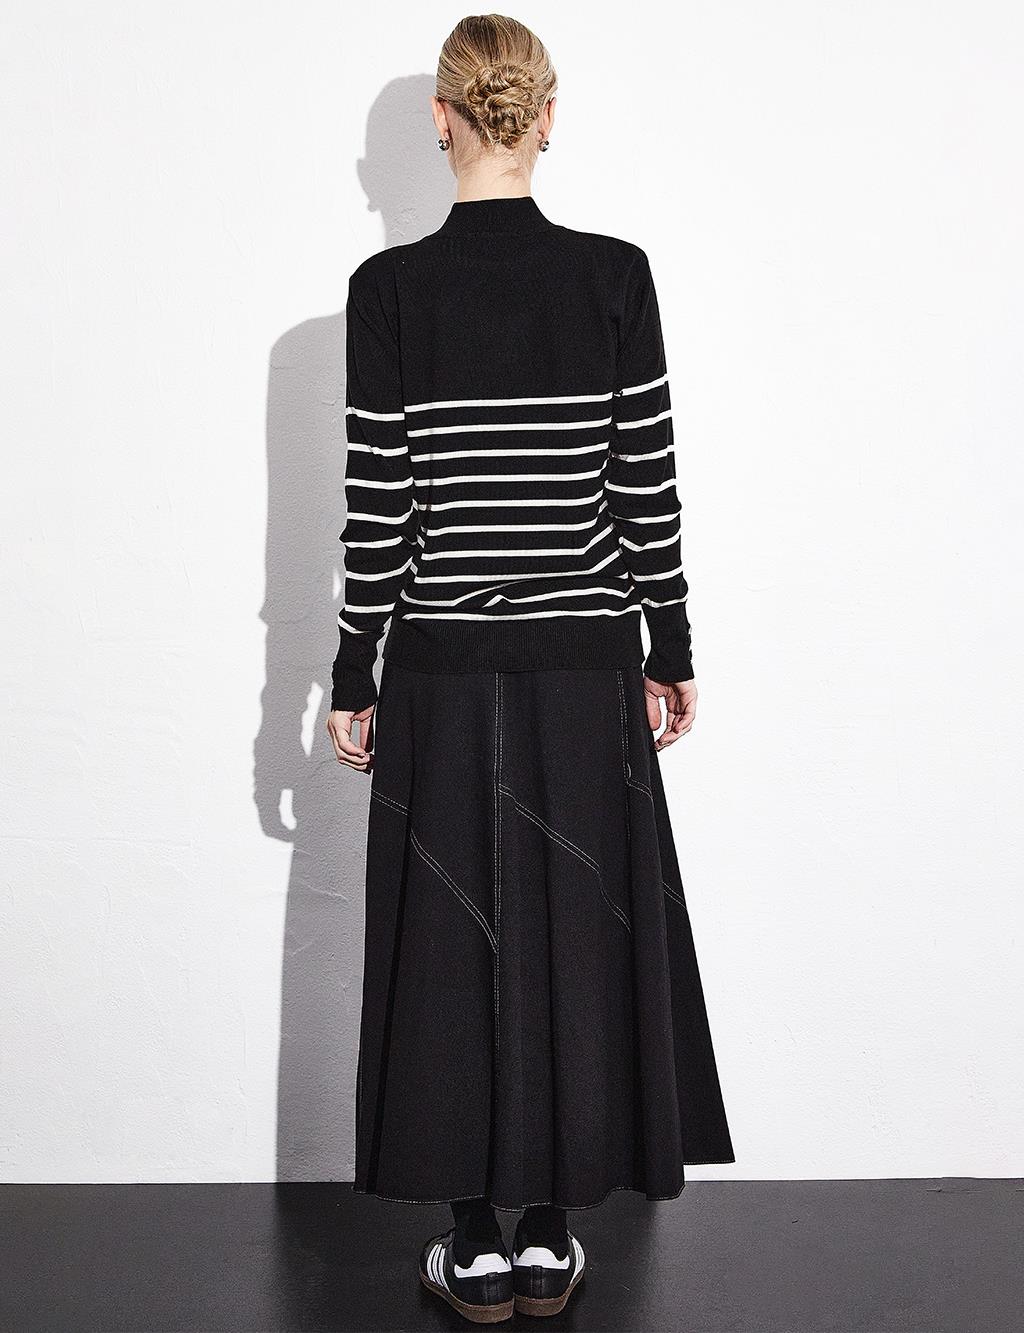 Turtleneck Striped Knitwear Blouse Black Optical White